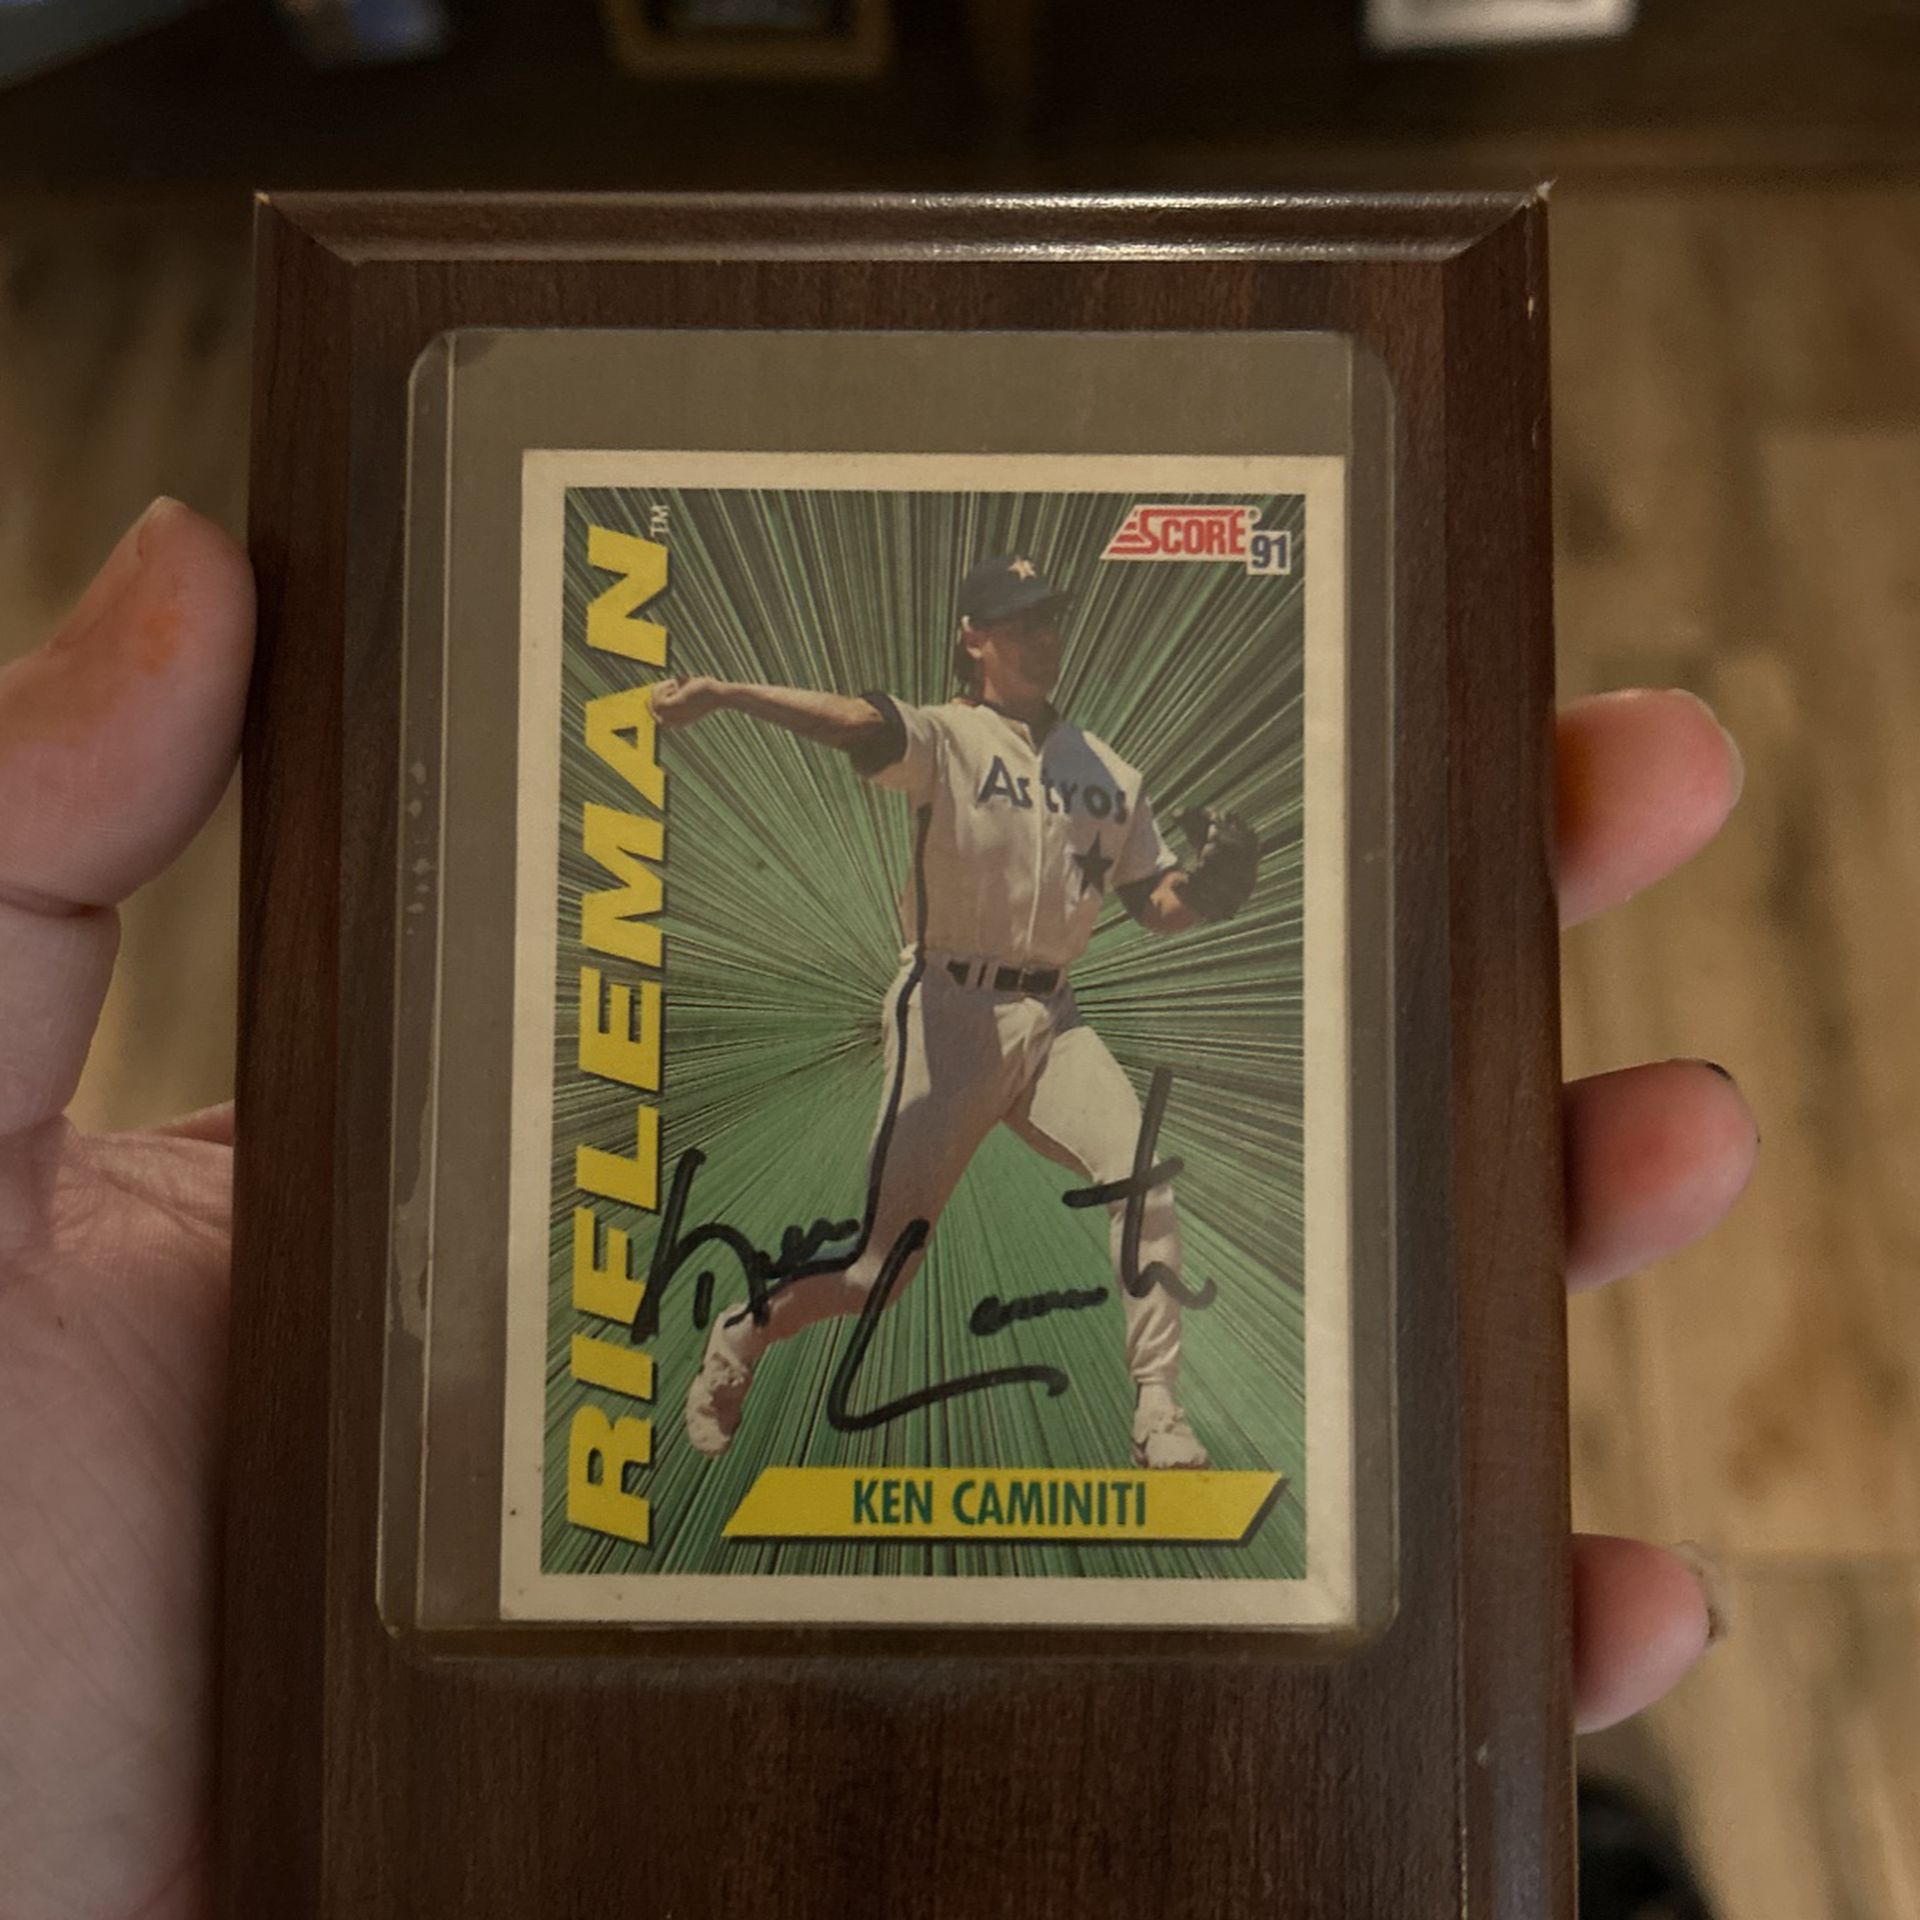 Score 1991 Ken Caminiti Autographed Baseball Card